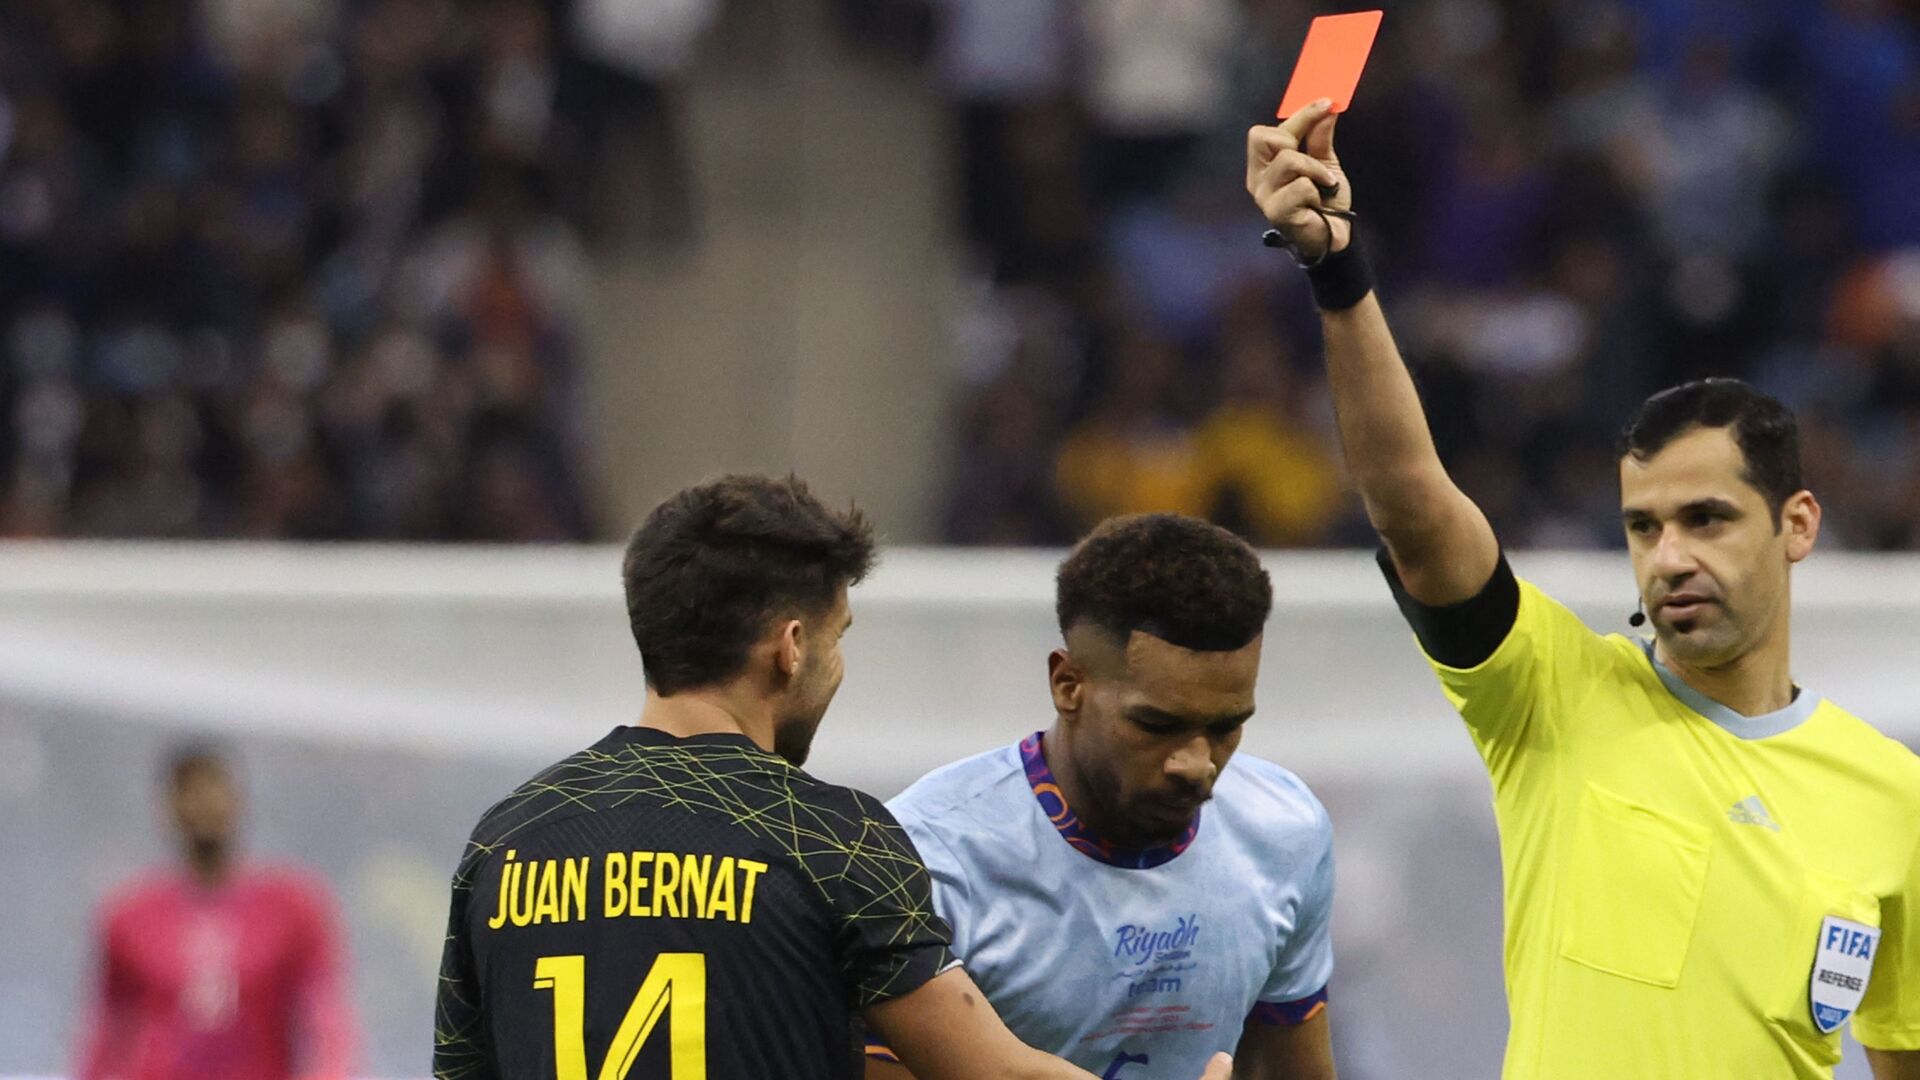 Watch PSG's Juan Bernat Receive Red Card vs. Riyadh AllStar XI